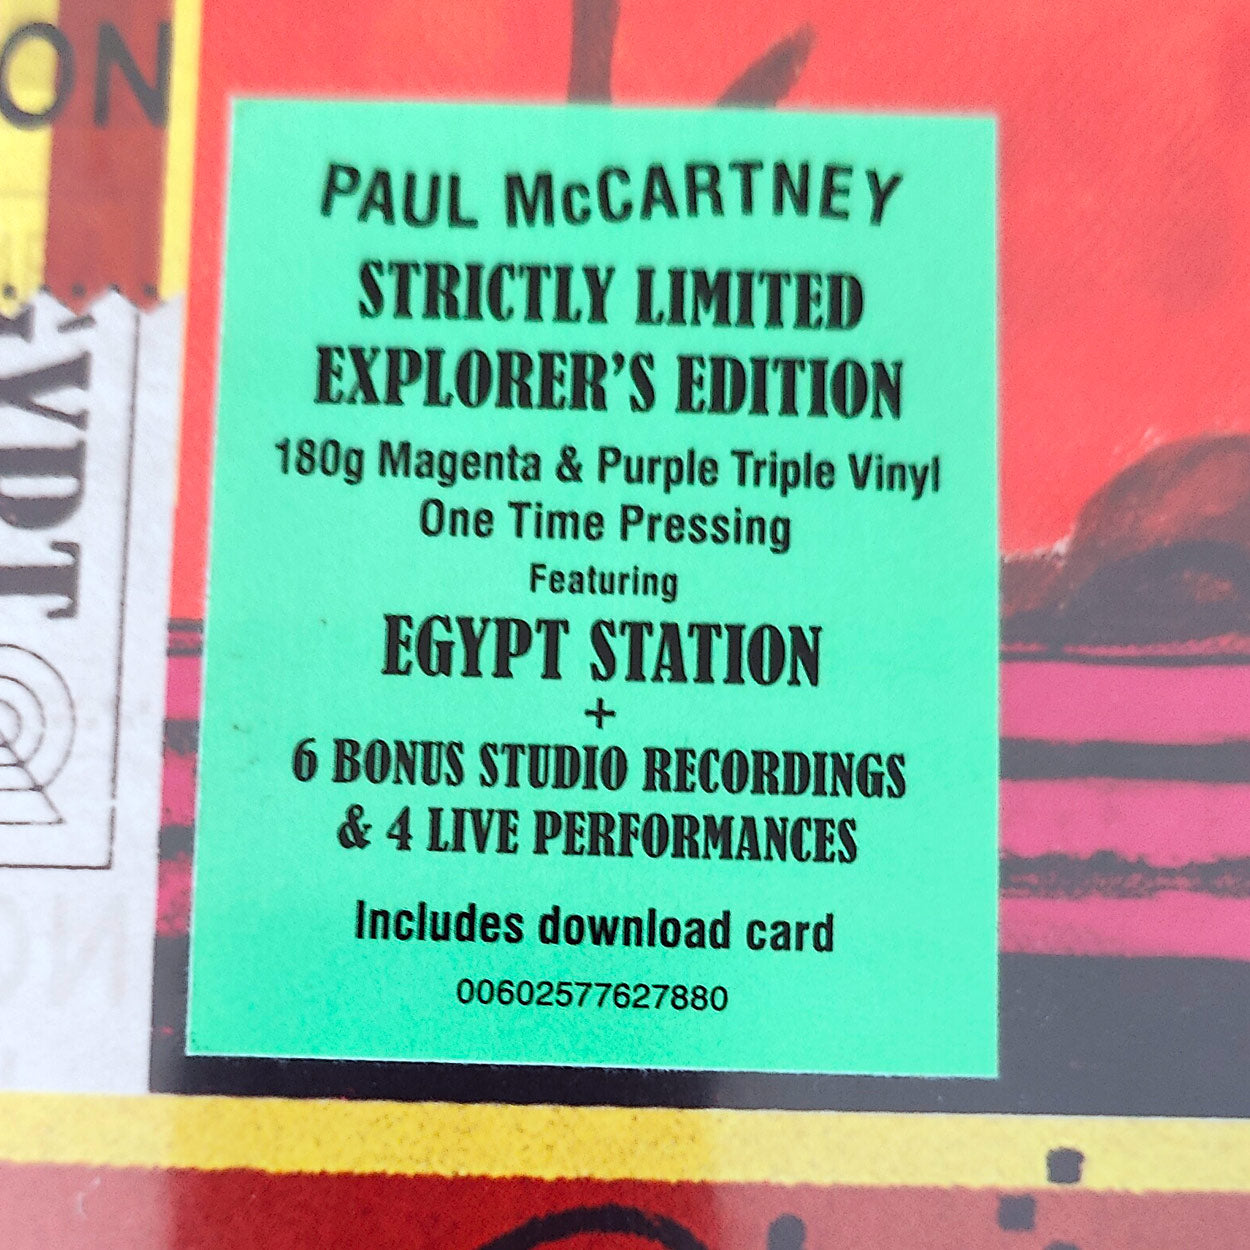 Paul McCartney / Egypt Station 'Explorers' Edition' 3LP limited edition coloured vinyl